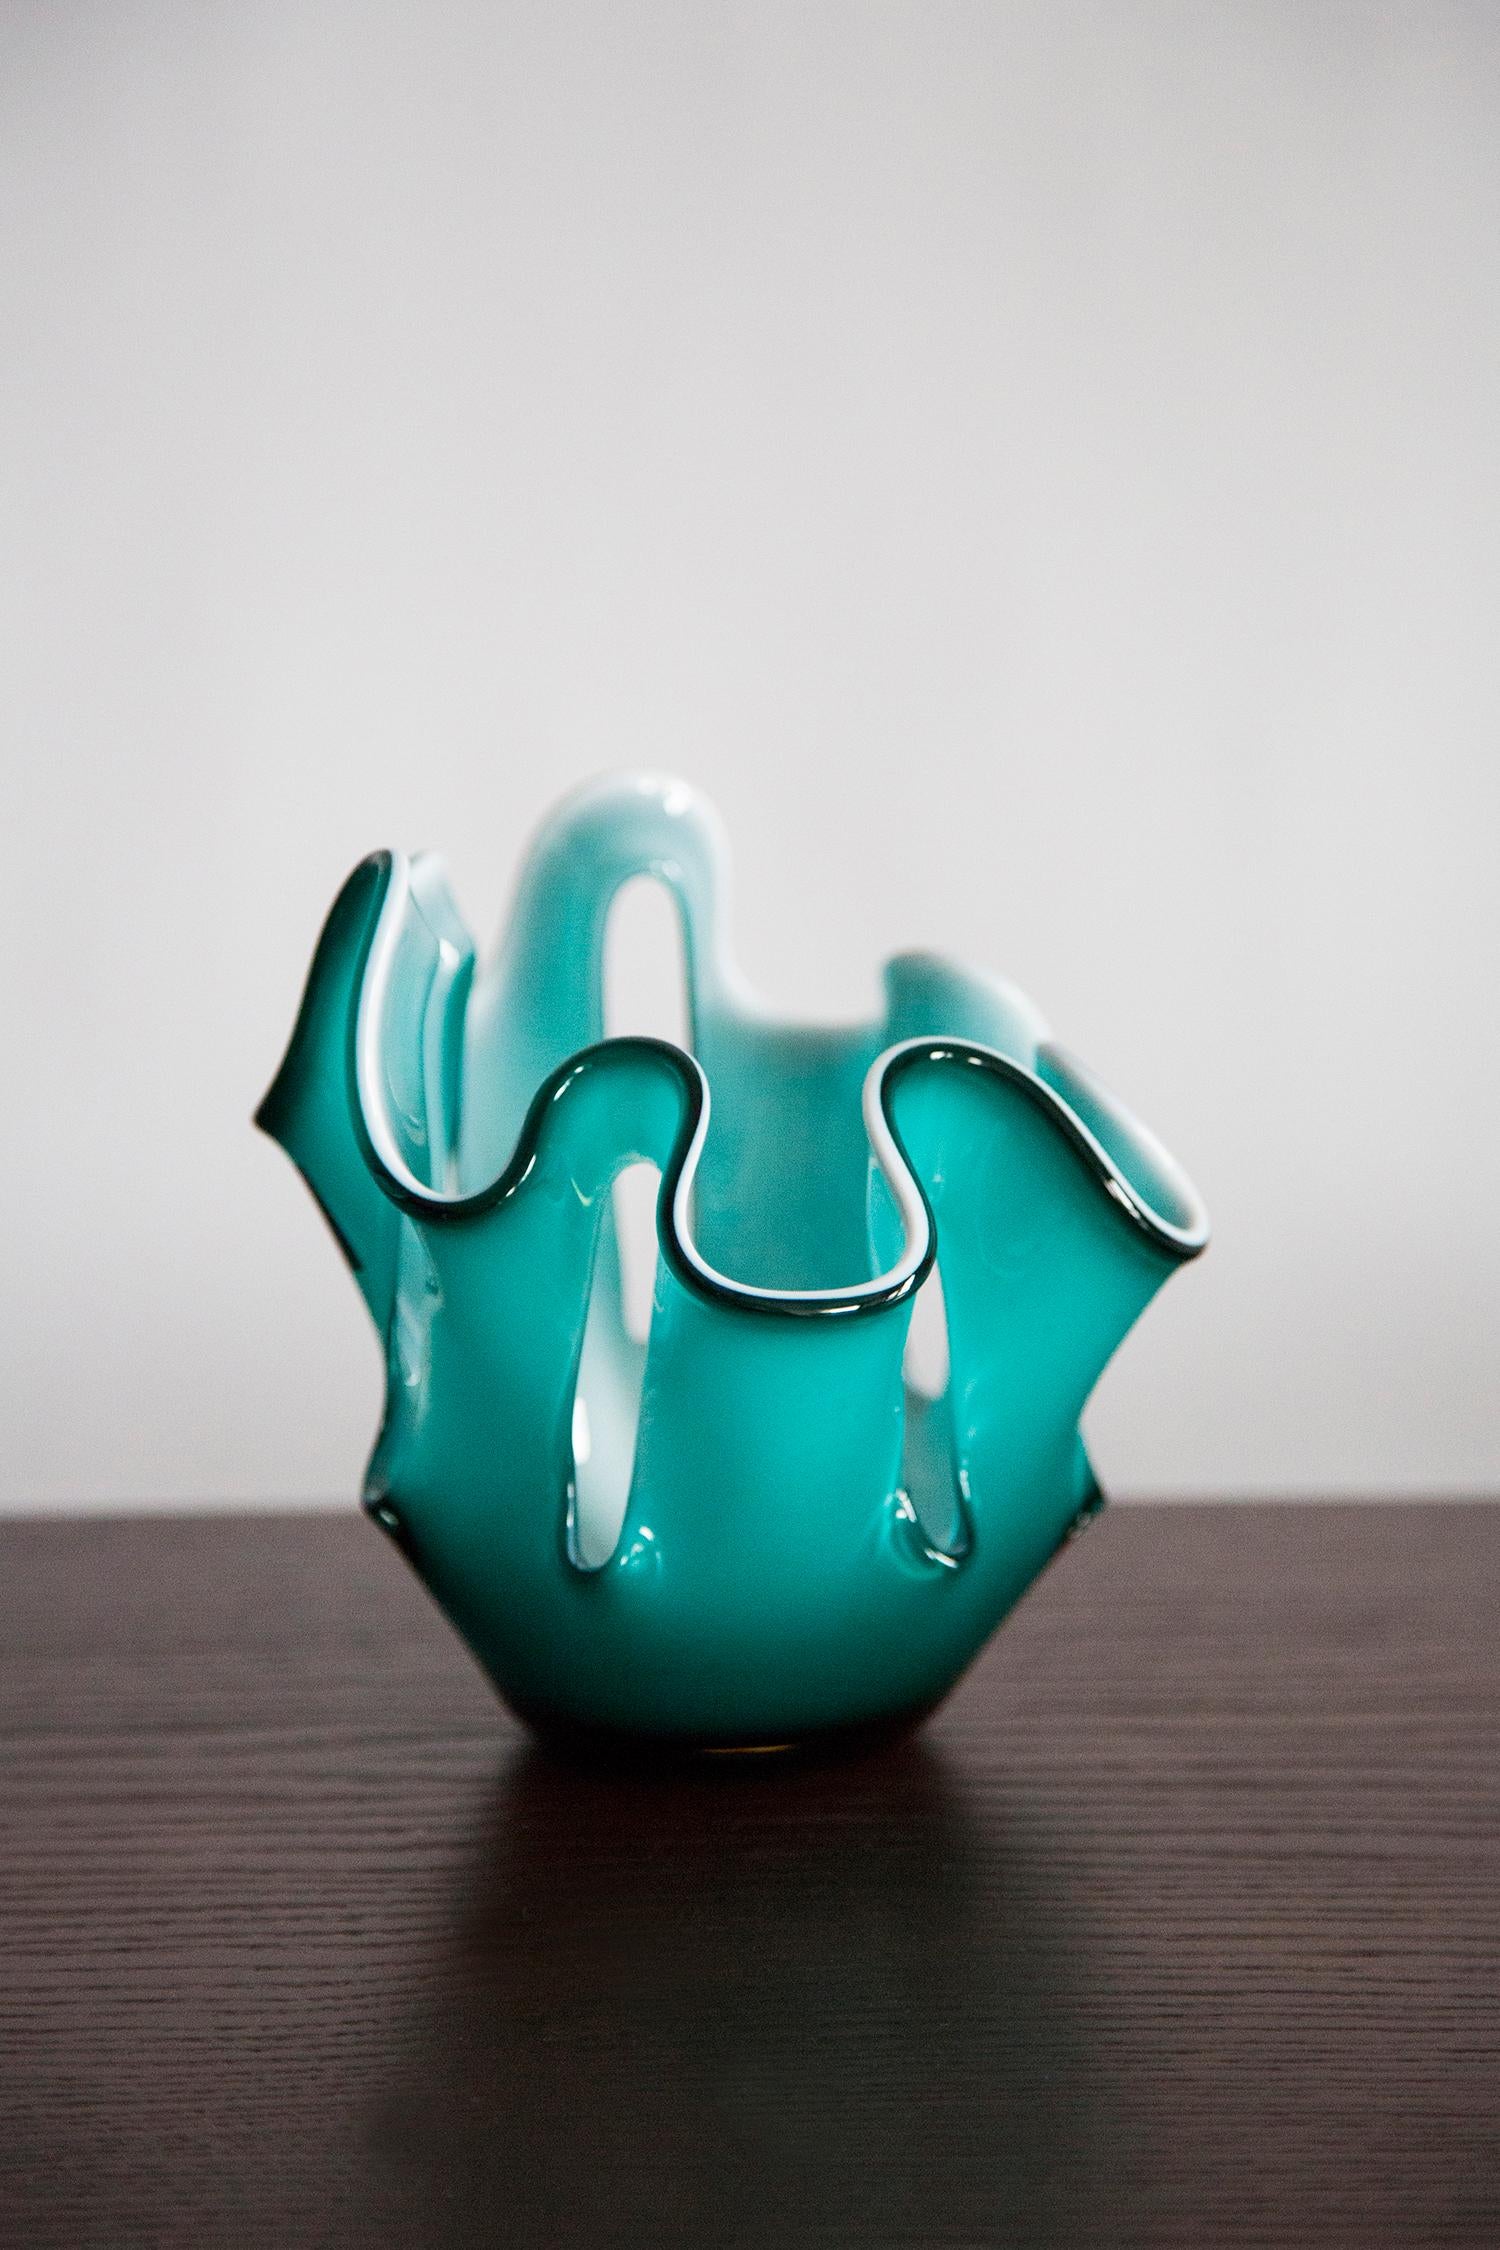 VASE “SCARF”
Author: Decorative Glassworks 